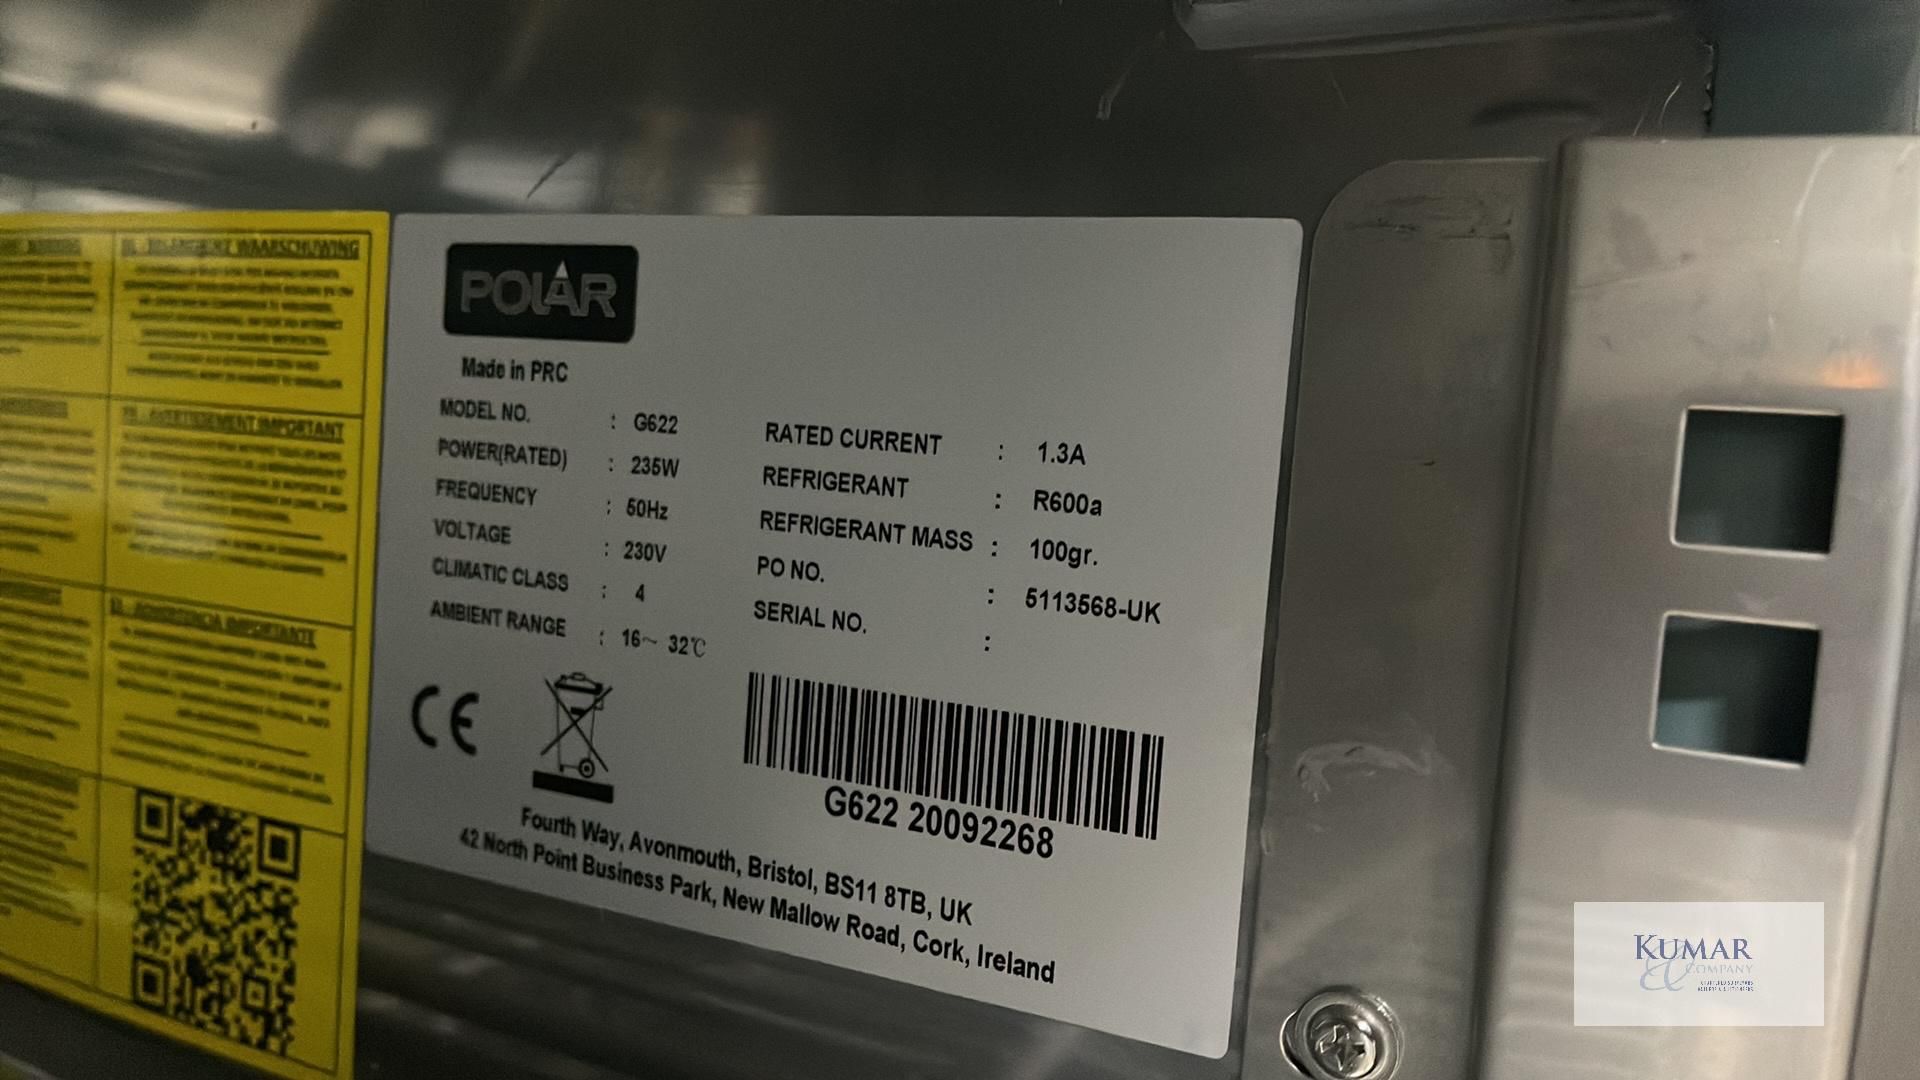 Polar G622 3 Door Counter Prep Refrigerator, Serial No. 92268, New Cost Â£779 + VAT - Image 6 of 6